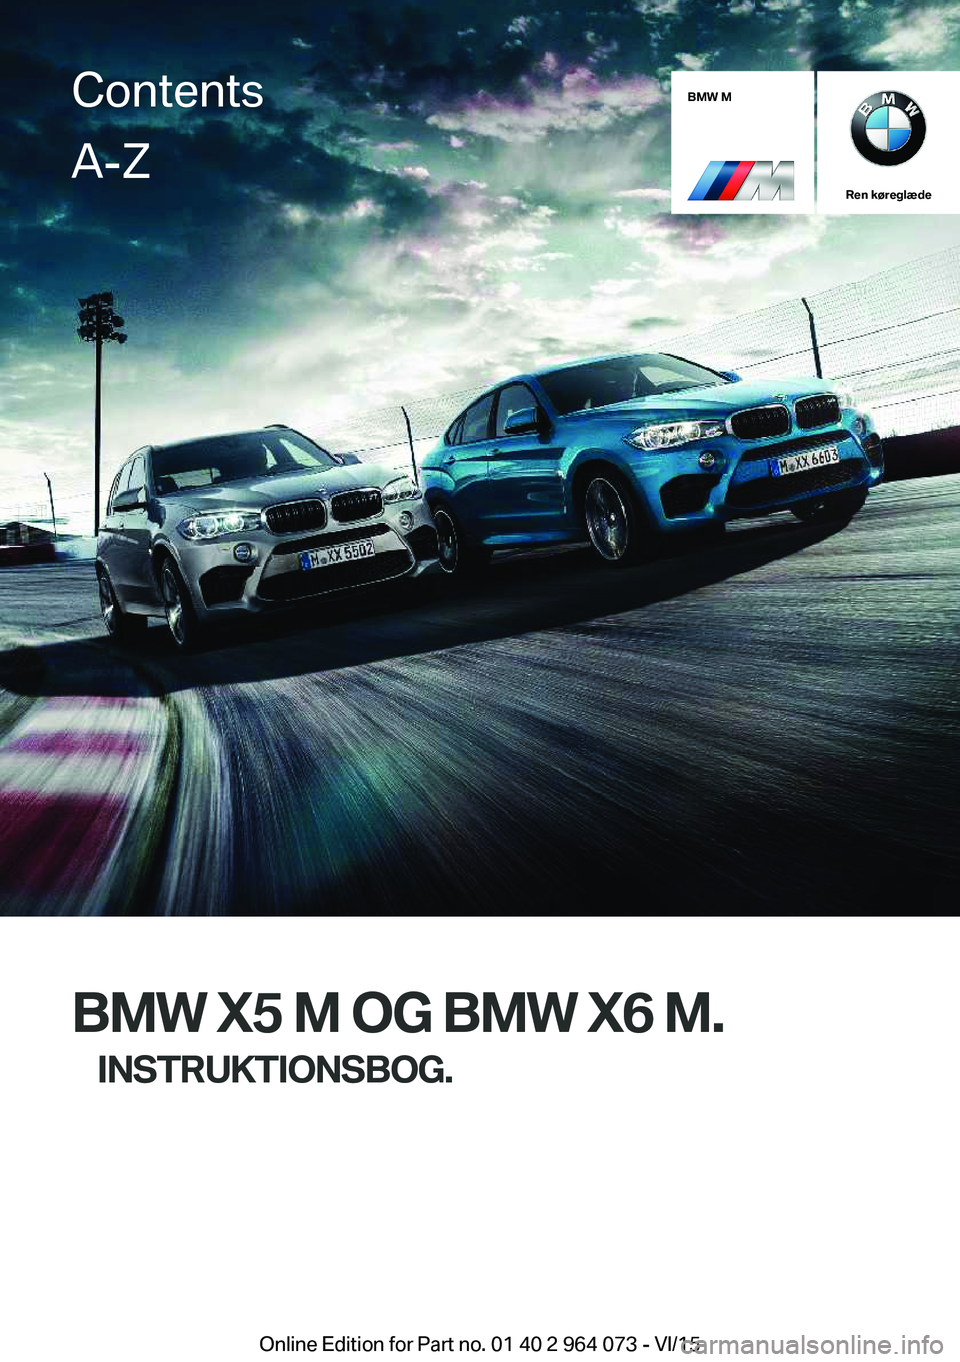 BMW X5 M 2016  InstruktionsbØger (in Danish) BMW M
Ren køreglæde
BMW X5 M OG BMW X6 M.INSTRUKTIONSBOG.
ContentsA-Z
Online Edition for Part no. 01 40 2 964 073 - VI/15   